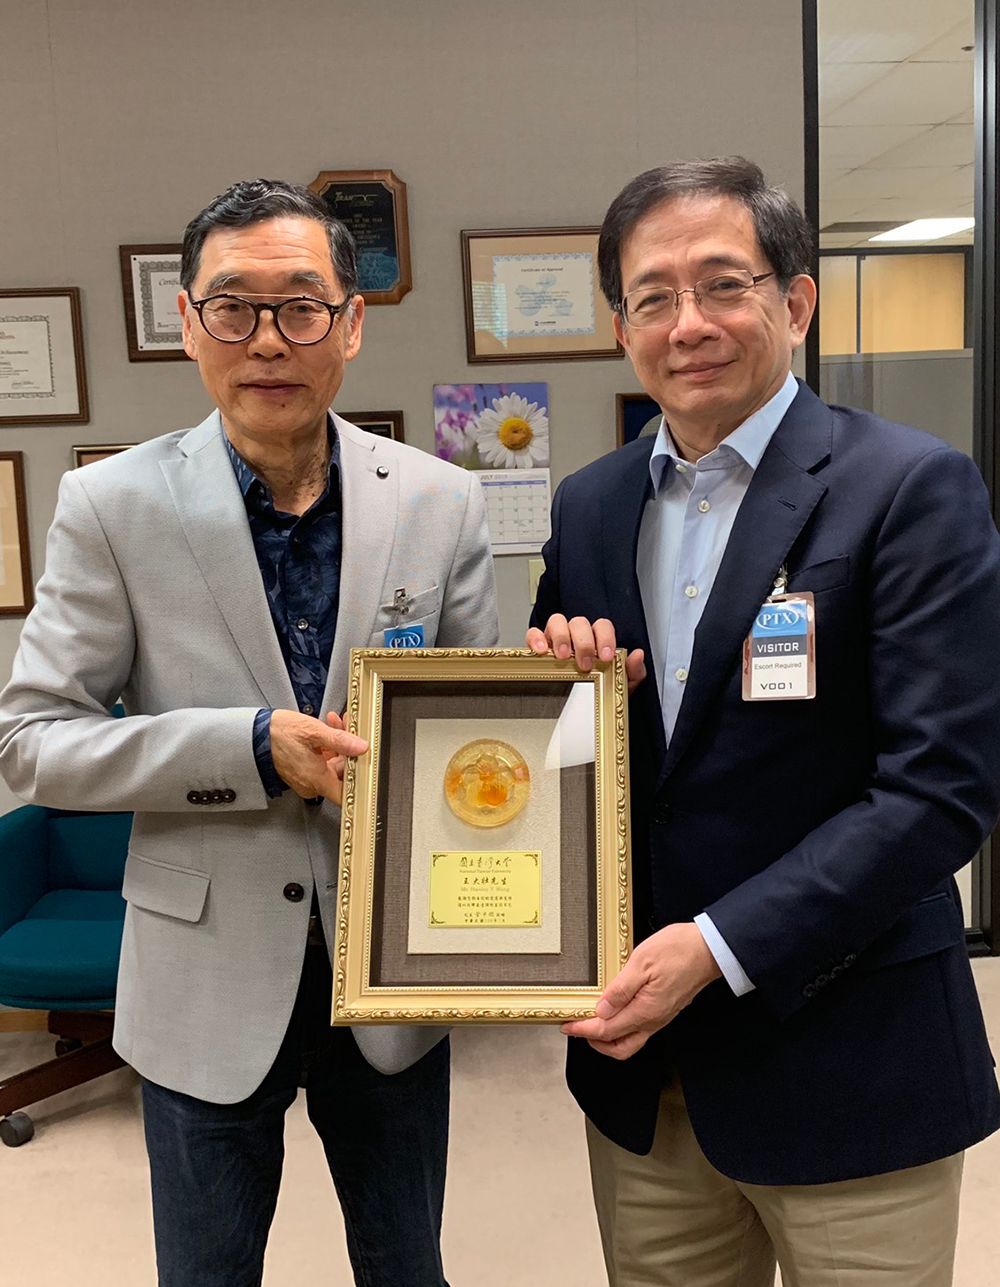 President Kuan (right) presents an appreciation plaque to alumnus Stanley Wang (left).